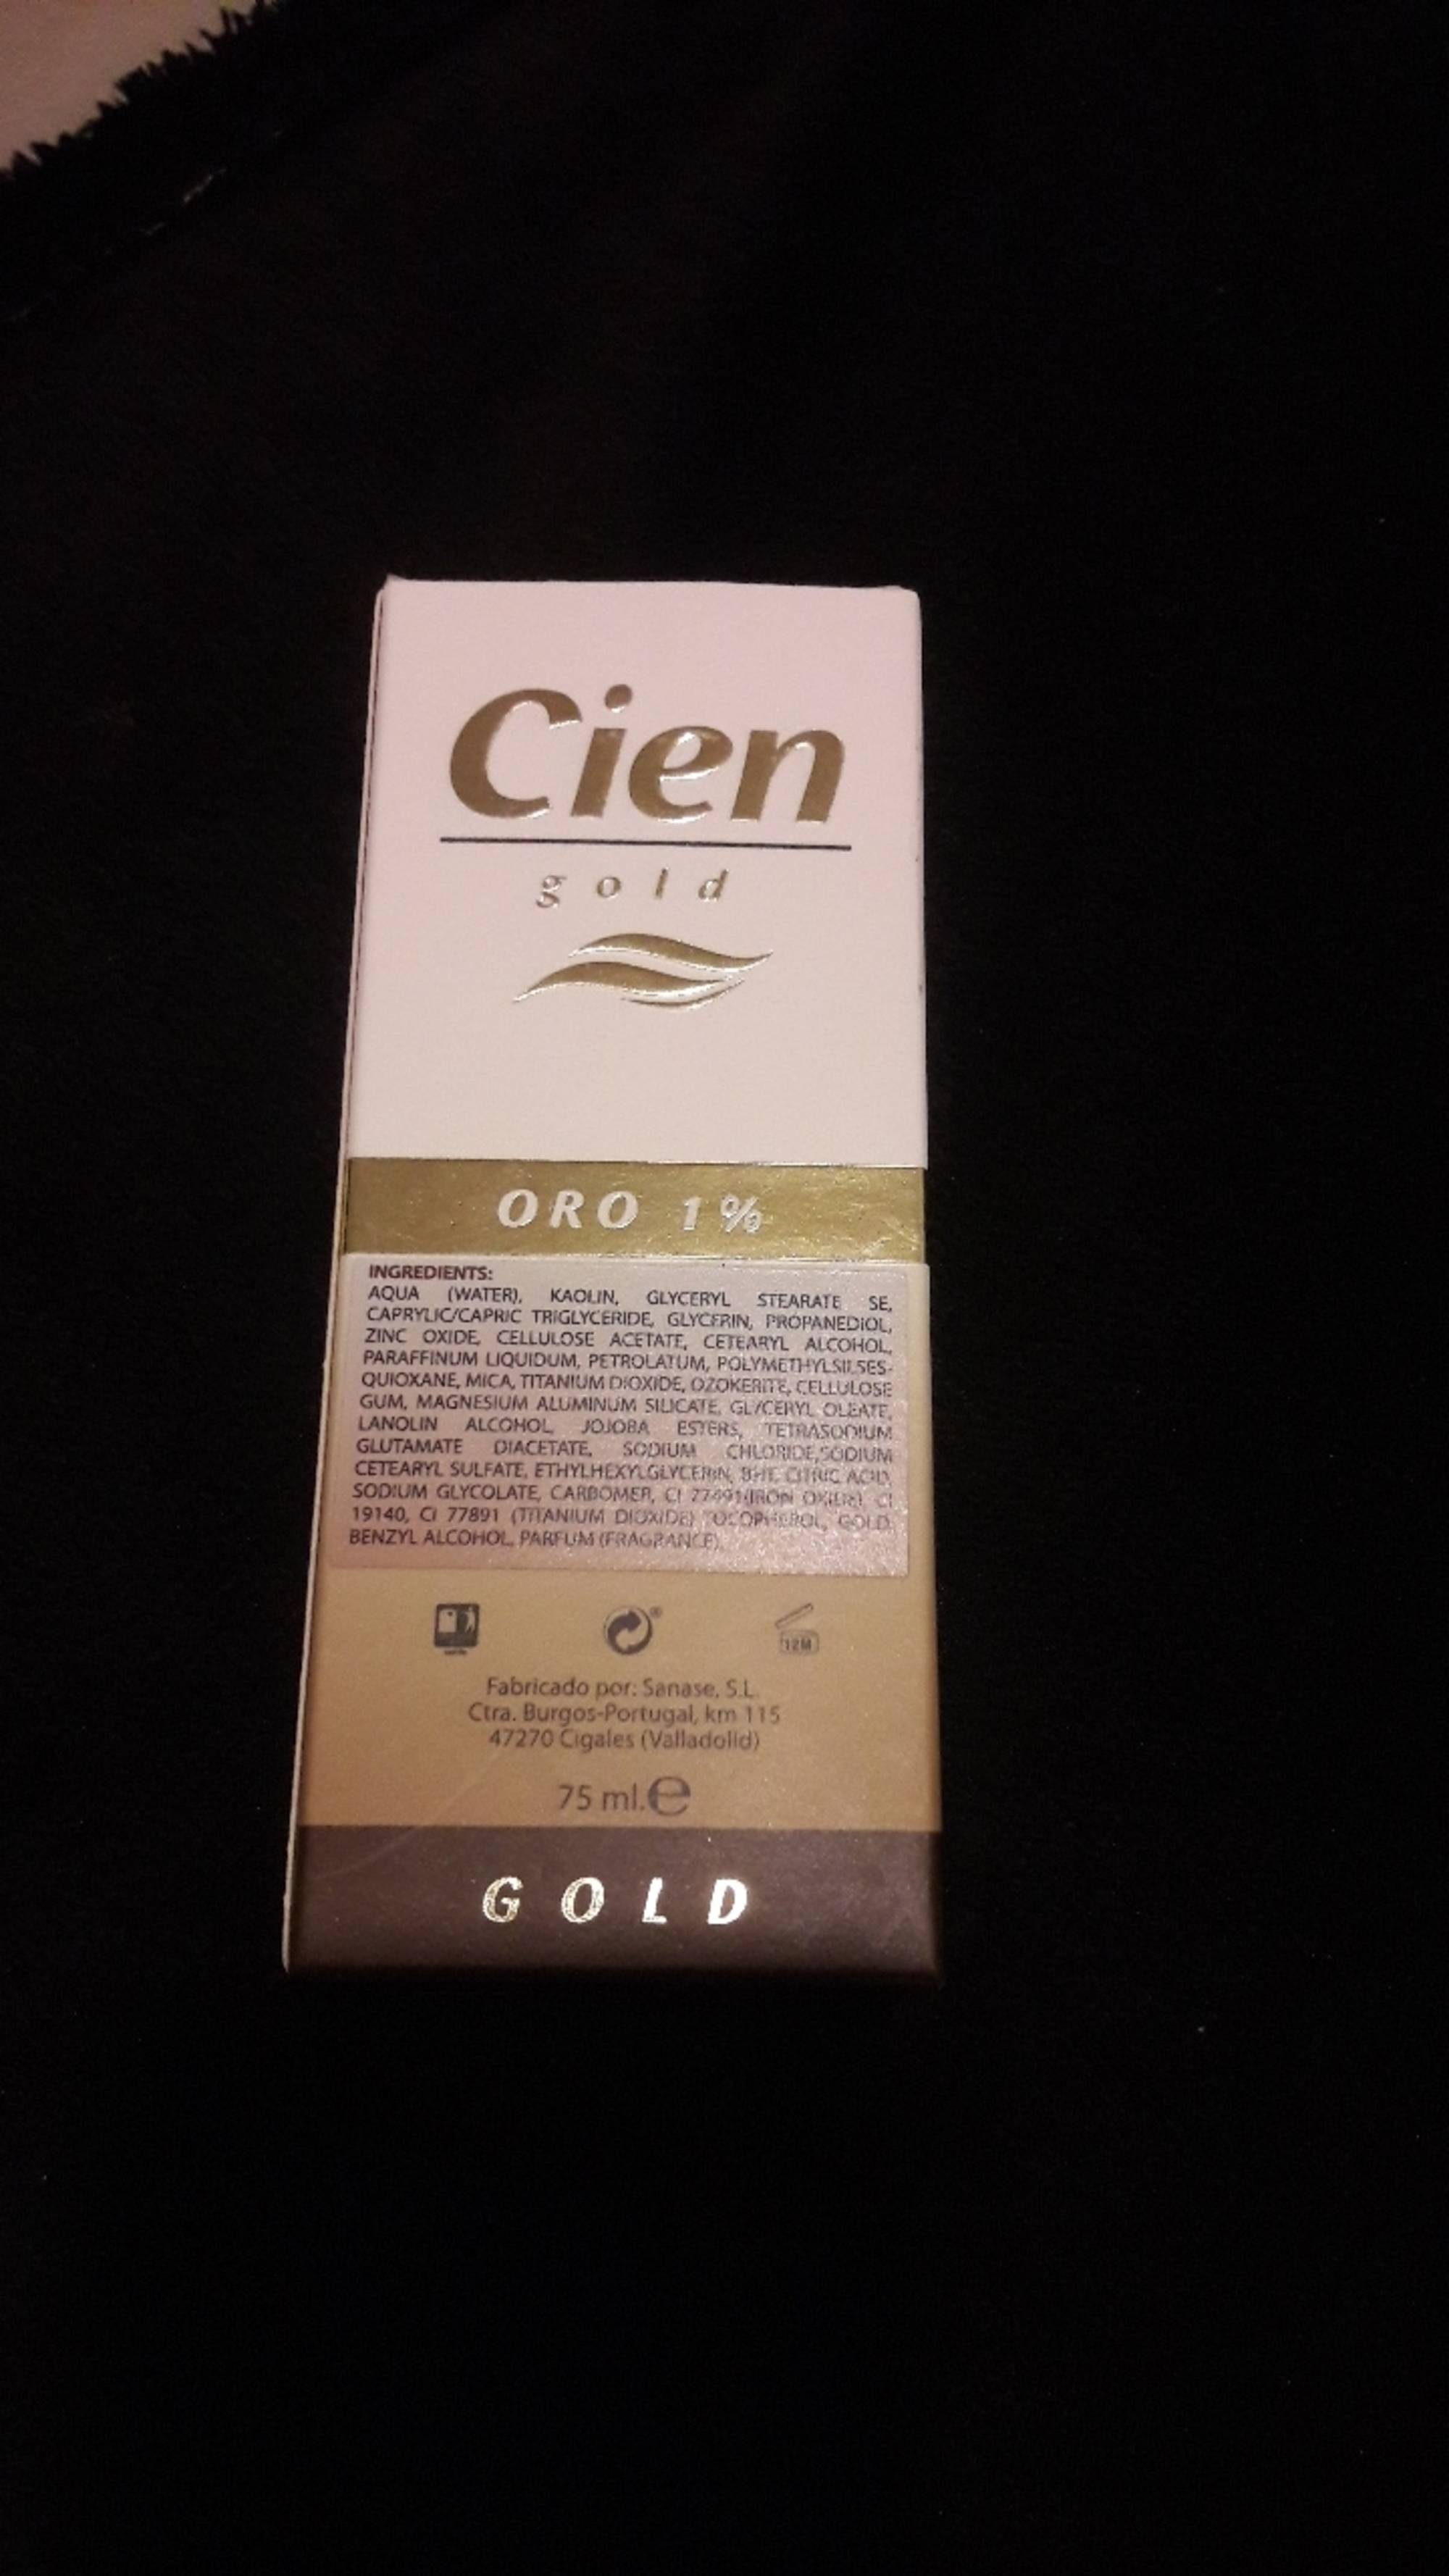 CIEN - Gold - Oro 1%